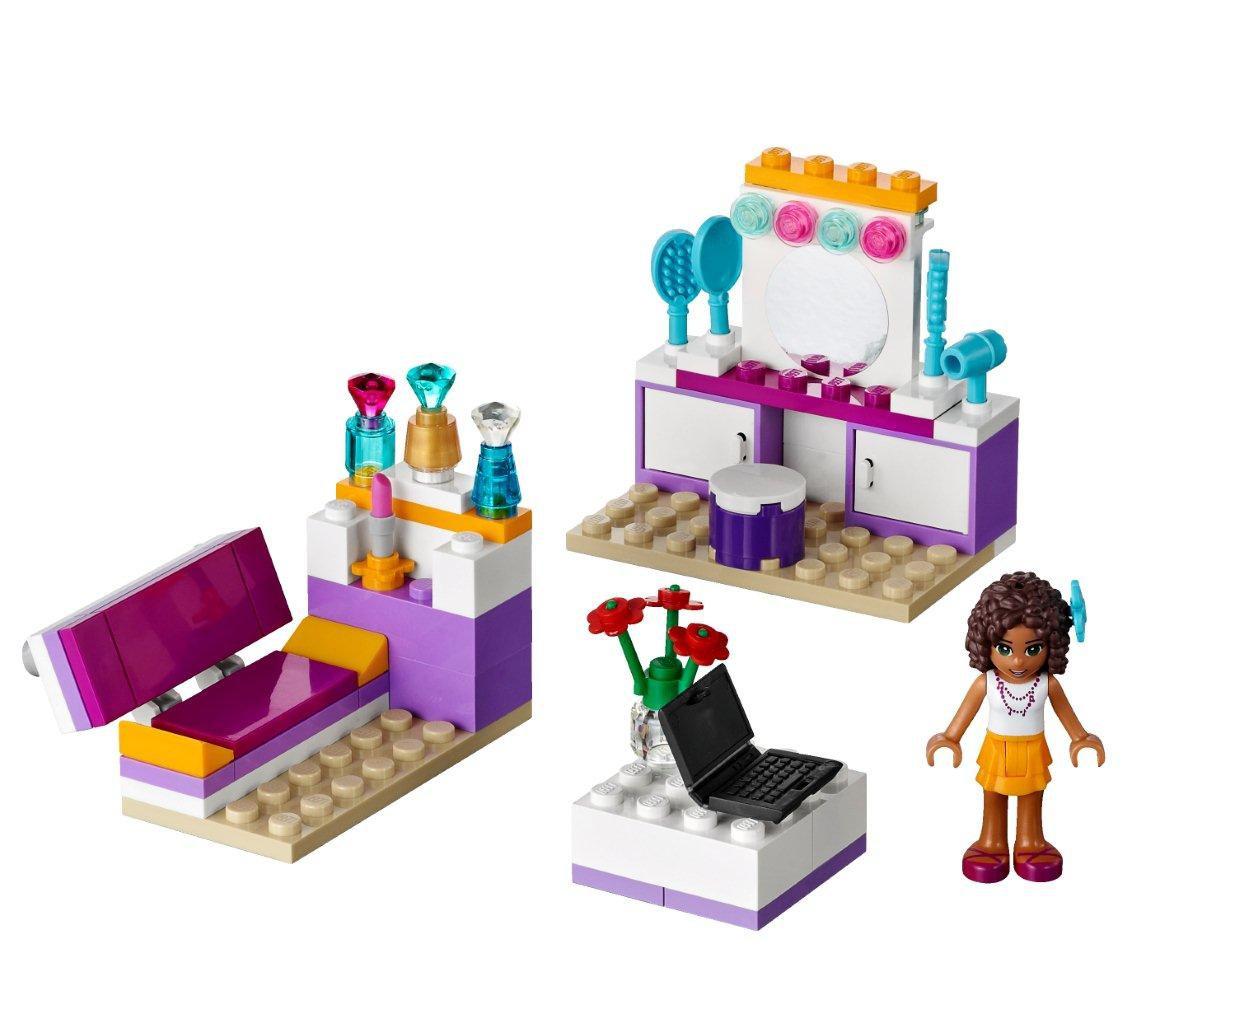 LEGO friends - andrea's bedroom - 41009